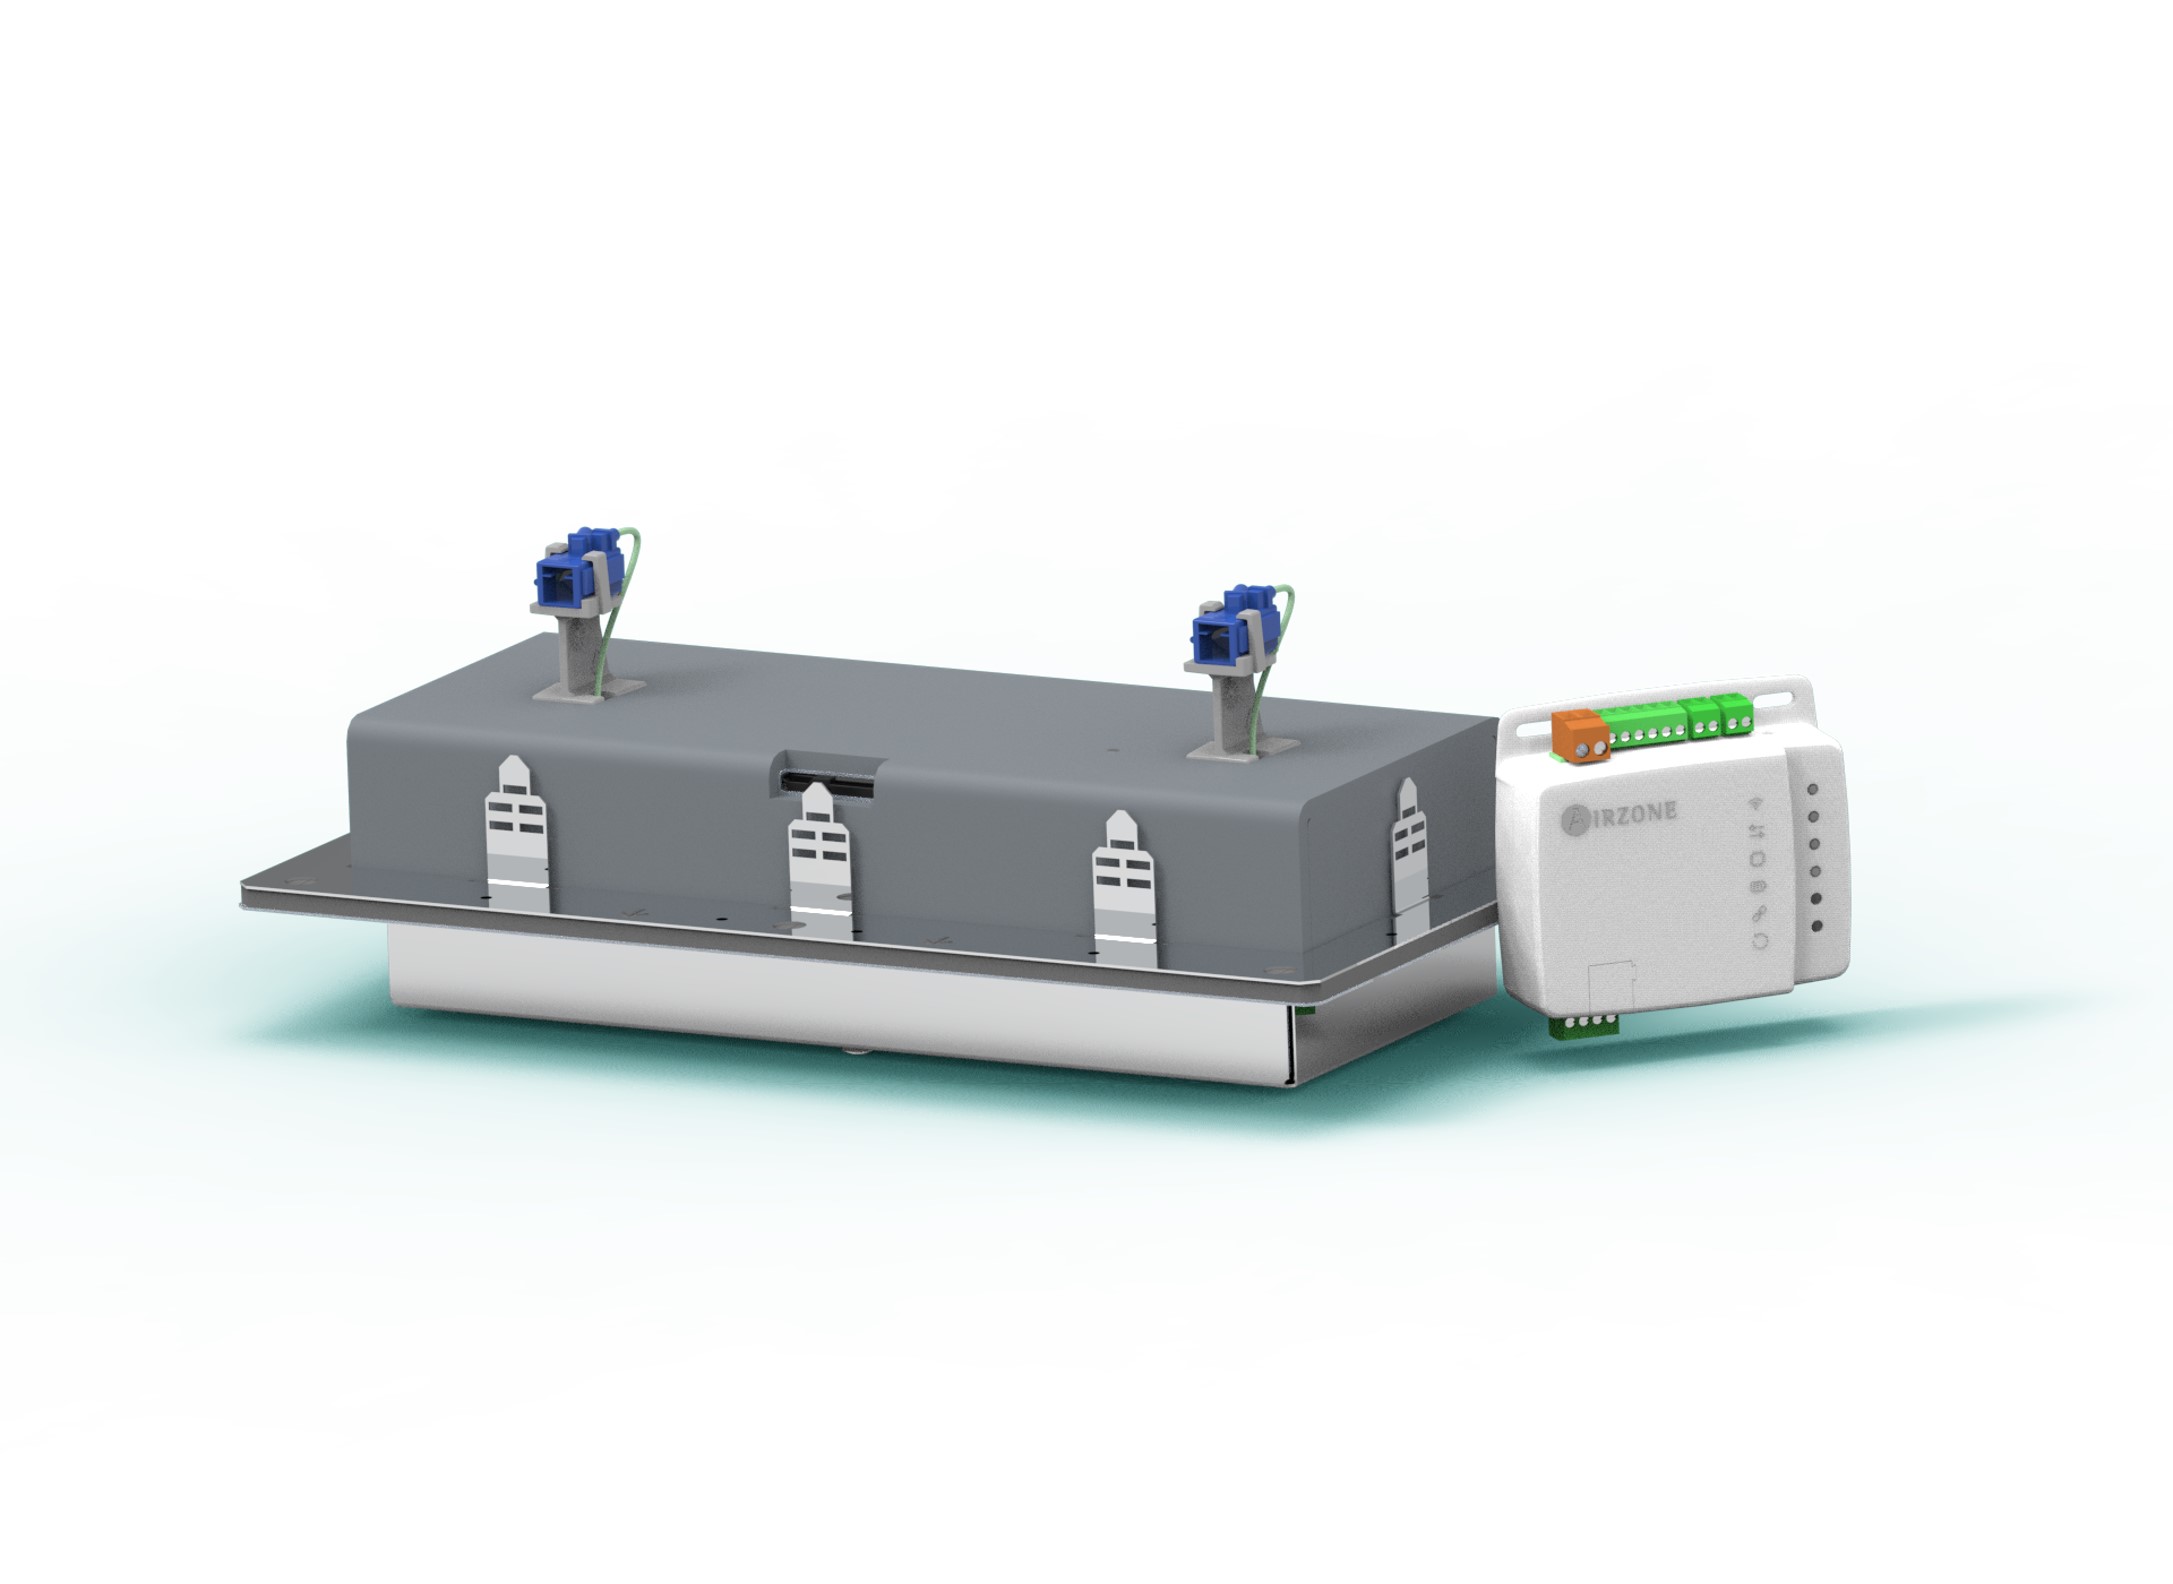 Pack AirQ Box dispositivo de monitorizaçãoe controlo CAI em conduta - Controlo Aidoo Pro Fujitsu 3 Wires